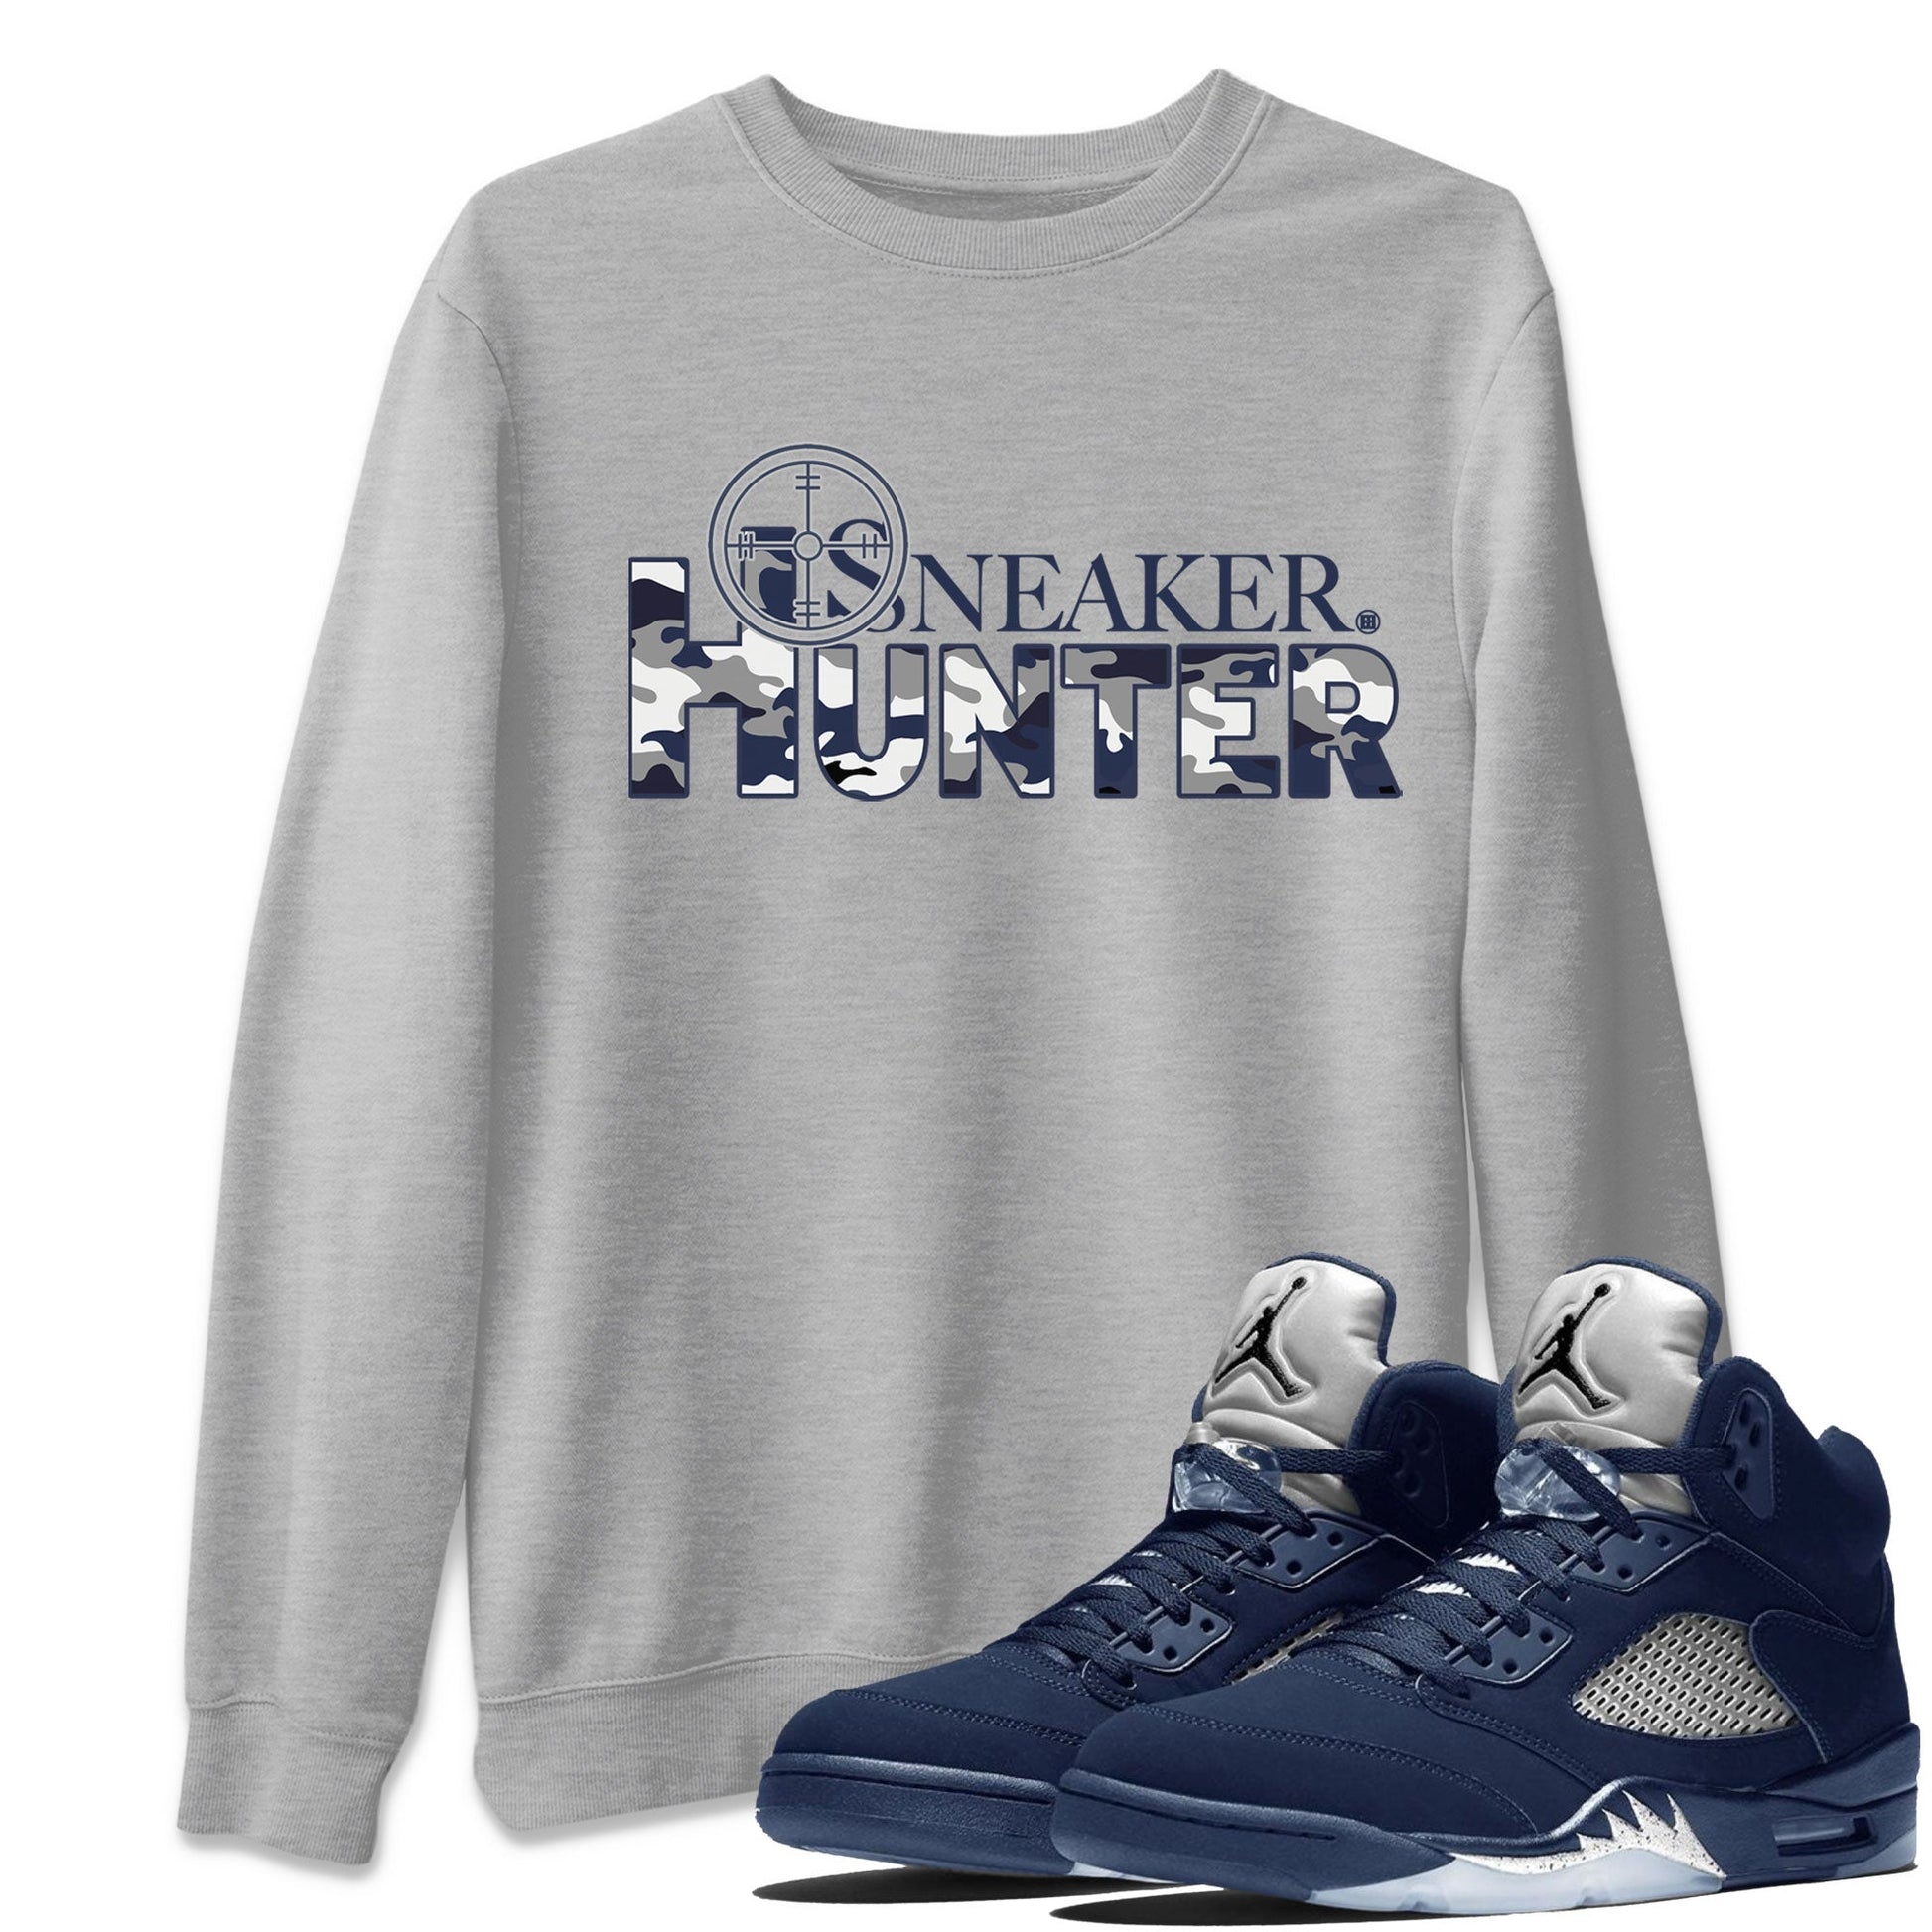 Air Jordan 5 Retro Midnight Navy shirt to match jordans Sneaker Hunter sneaker tees Air Jordan 5 Midnight Navy SNRT Sneaker Release Tees Unisex Heather Grey 1 T-Shirt